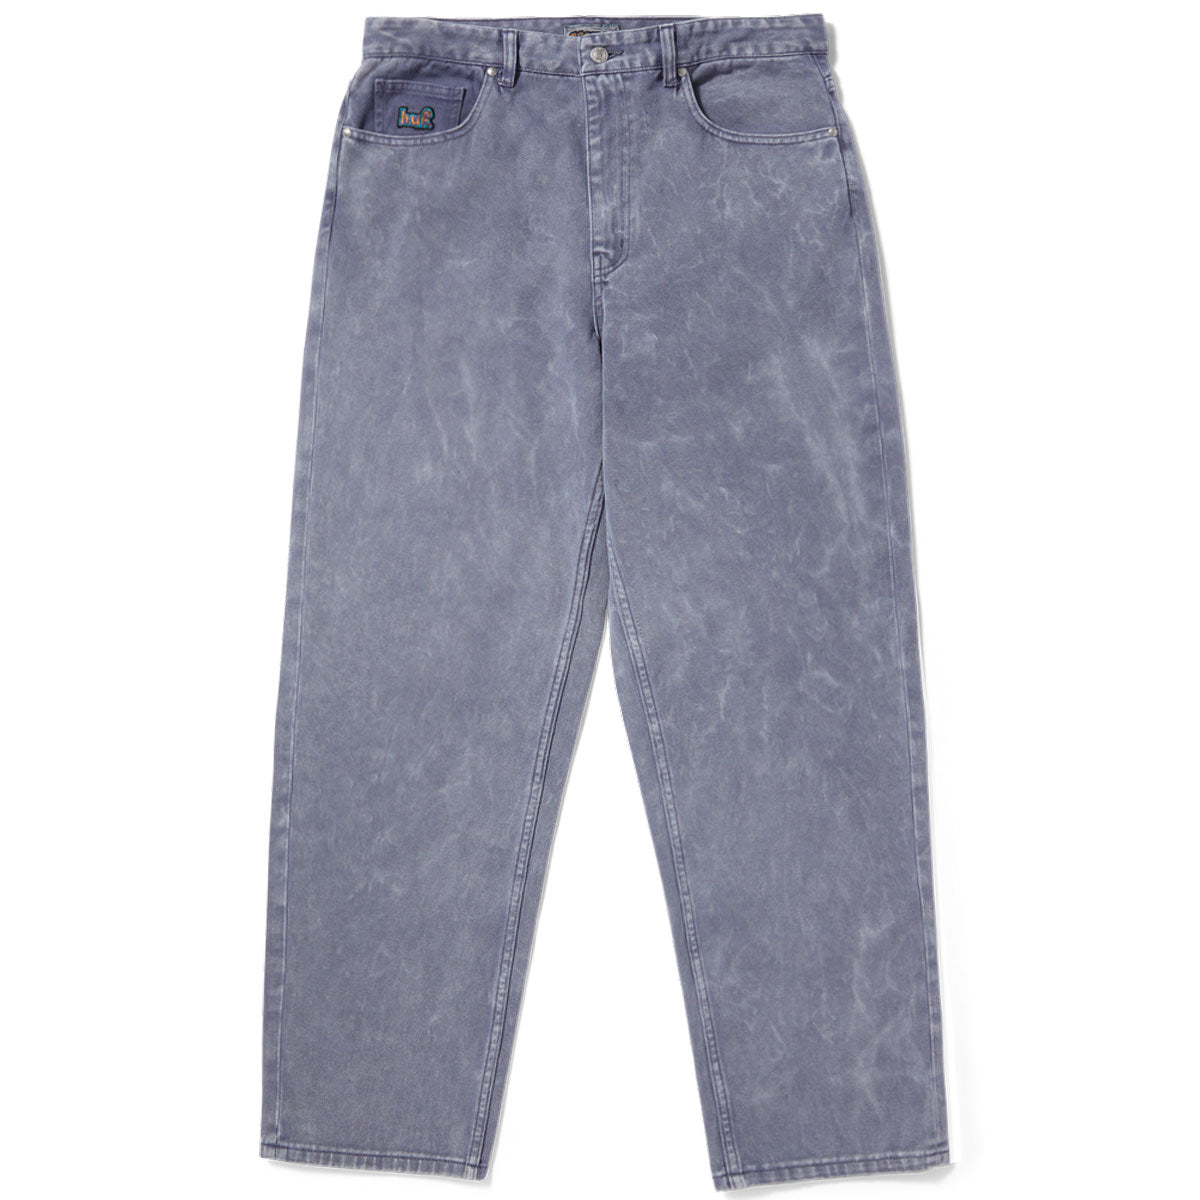 HUF Cromer Washed Pants - Dust Purple image 1